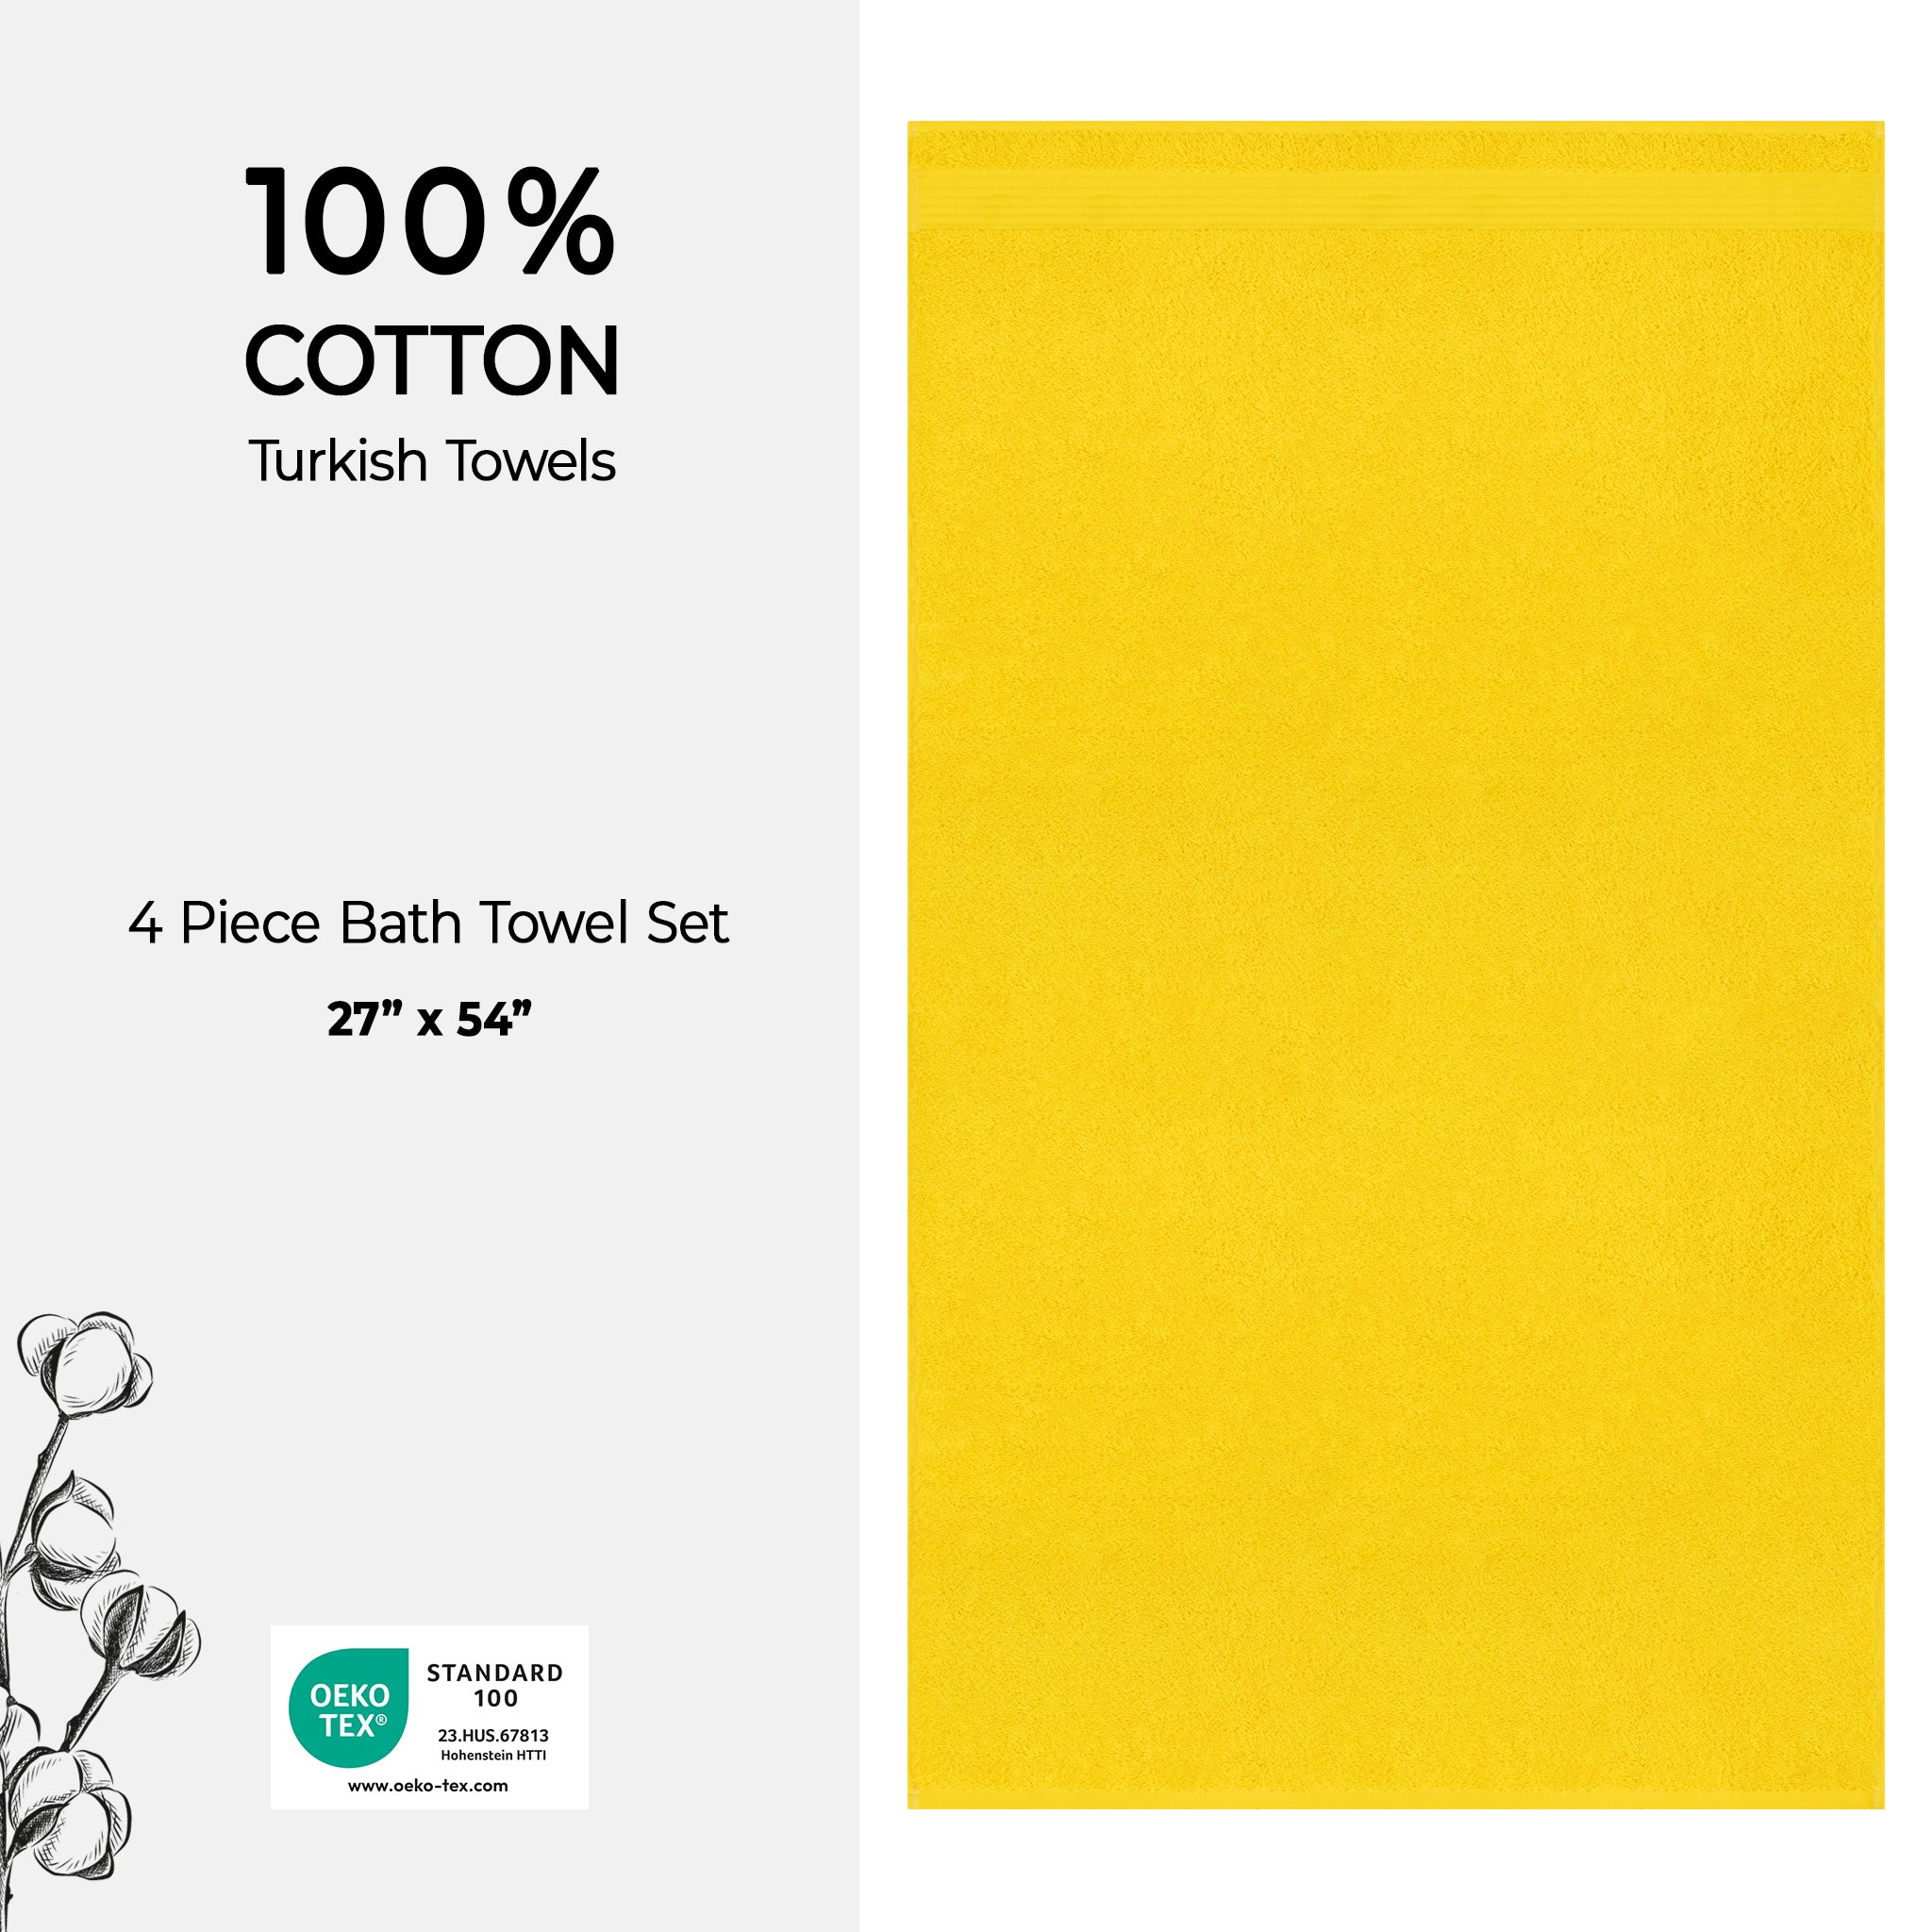 American Soft Linen Bekos 100% Cotton Turkish Towels, 4 Piece Bath Towel Set -turquoise-yellow-04